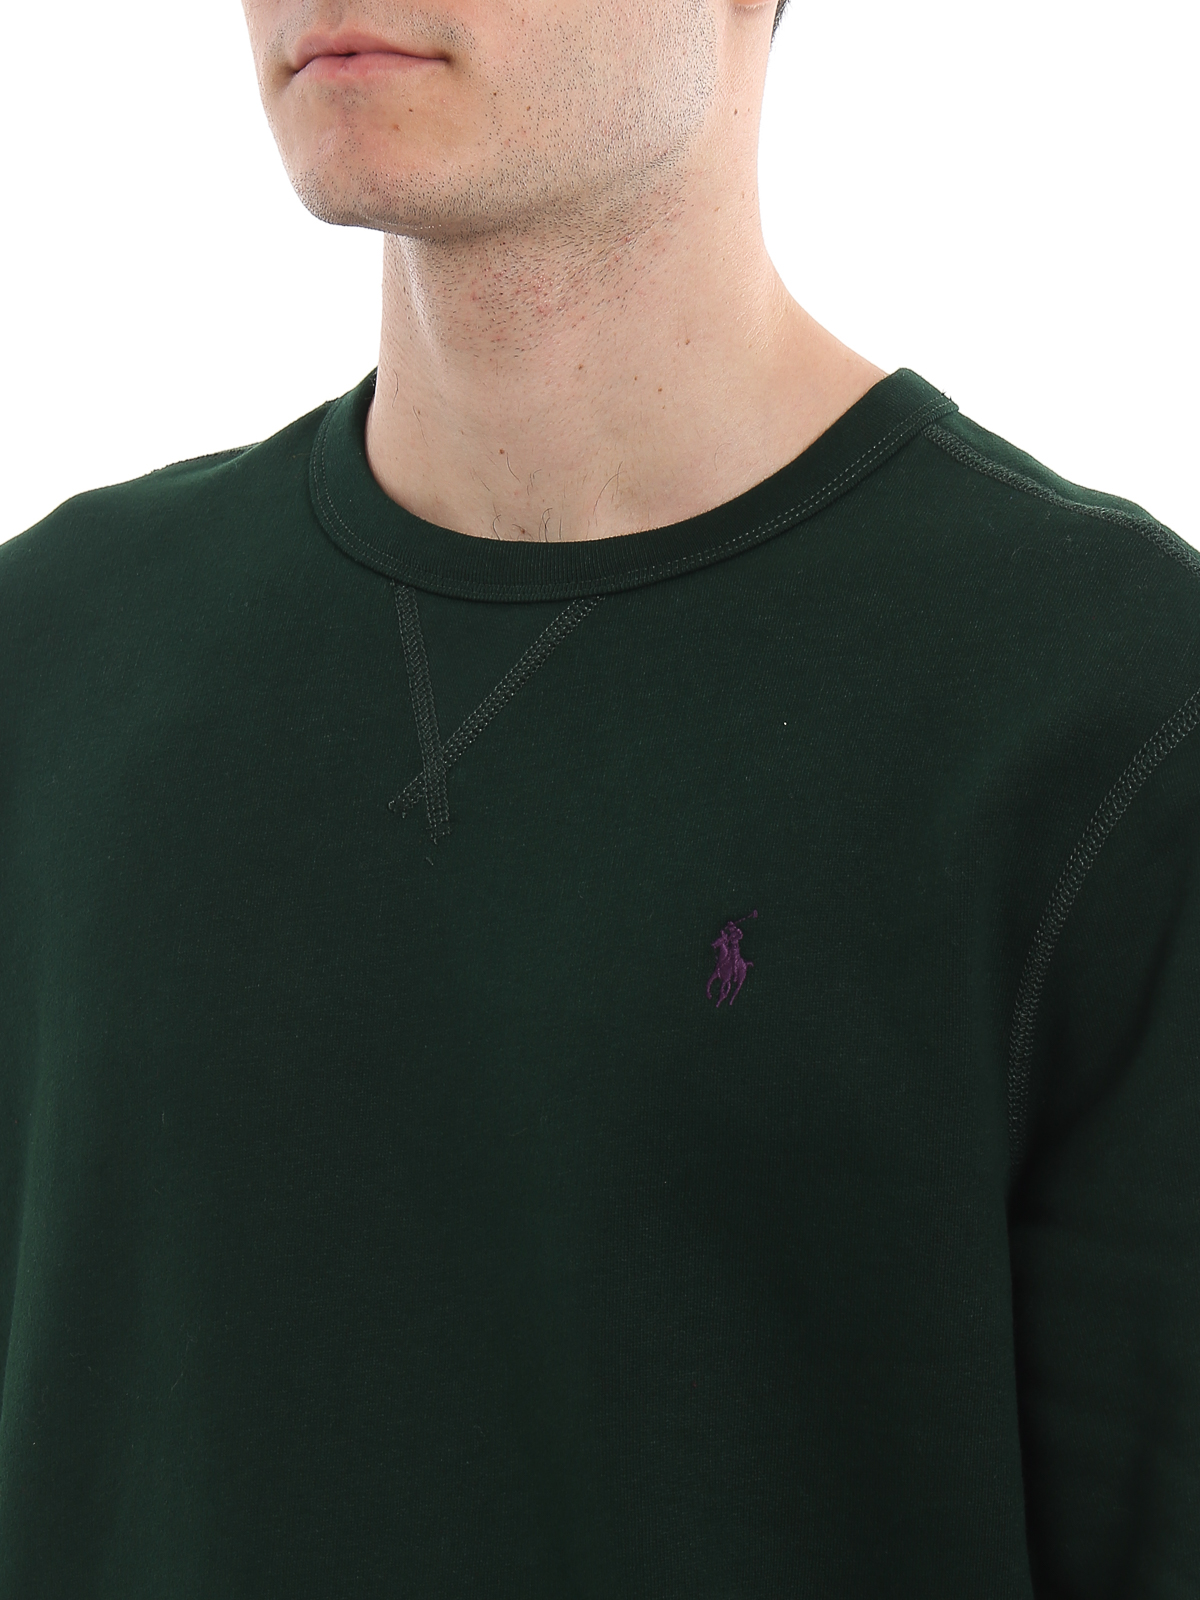 Sweatshirts & Sweaters Polo Ralph Lauren - Green cotton blend sweatshirt -  710766772006